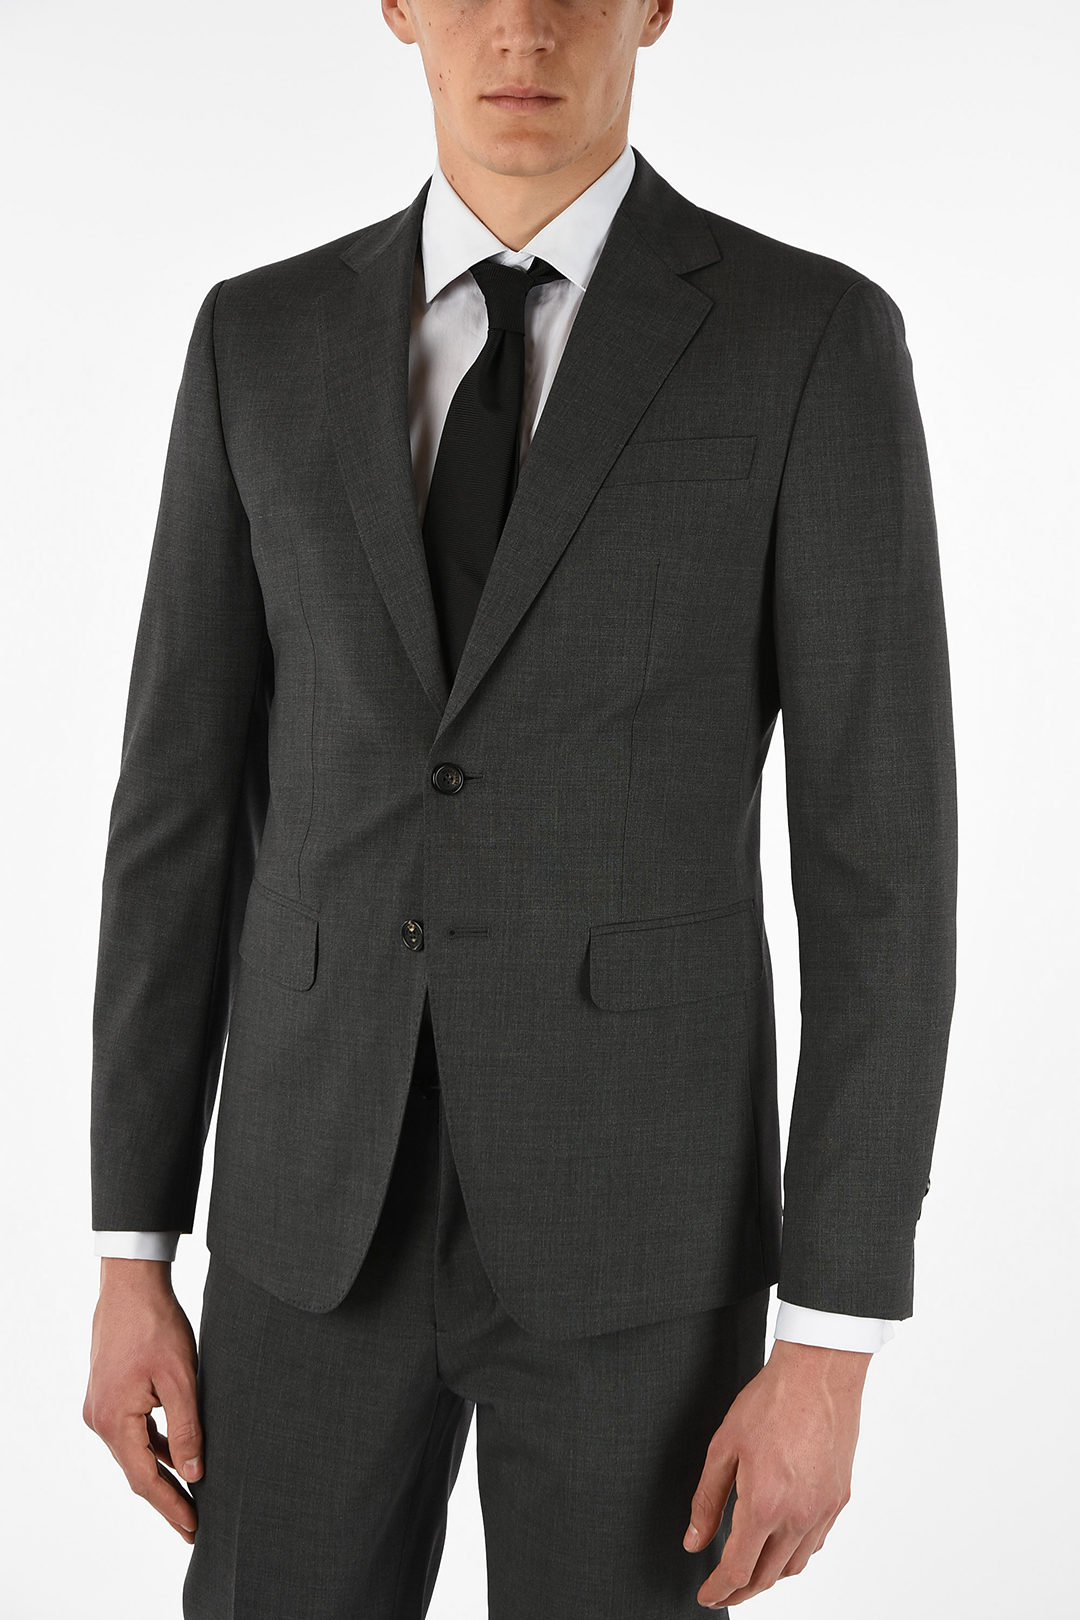 virgin-wool-blend-side-vents-suit-2-button-manchester-suit_677788_zoom.jpg